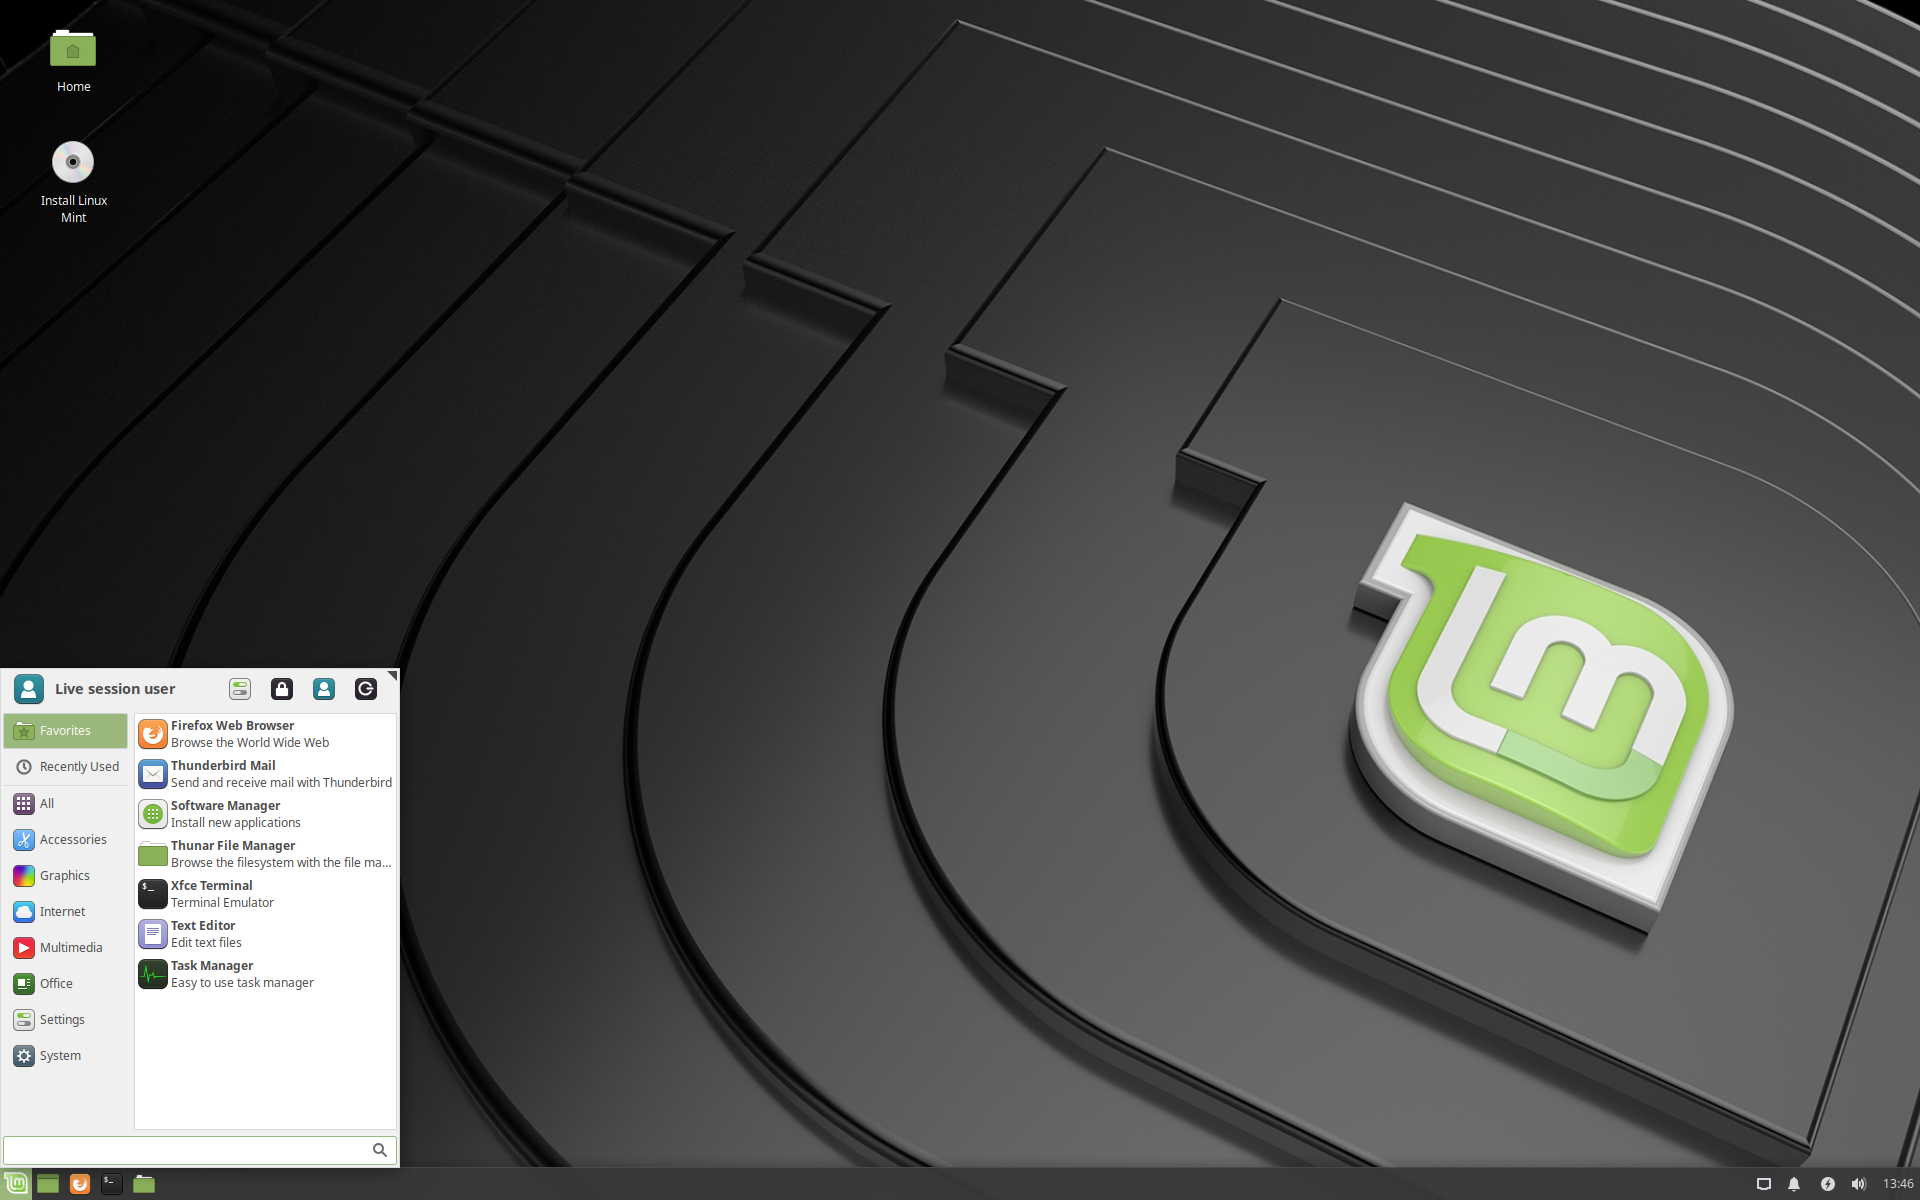 Lodge Doven gele Linux Mint 19 “Tara” Xfce released! – The Linux Mint Blog